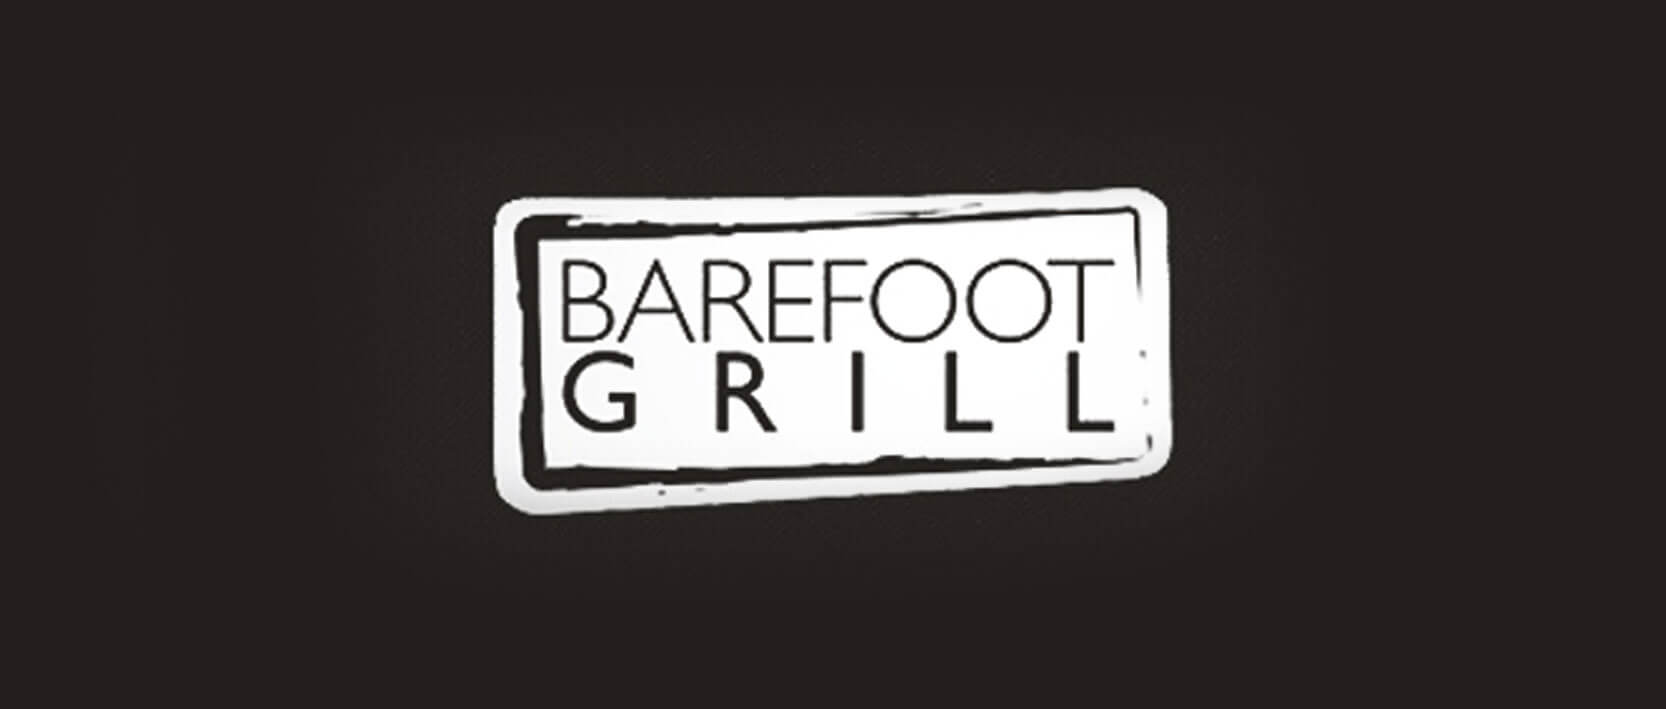 Secrets St. James Montego Bay Restaurants and Bars - Barefoot Grill